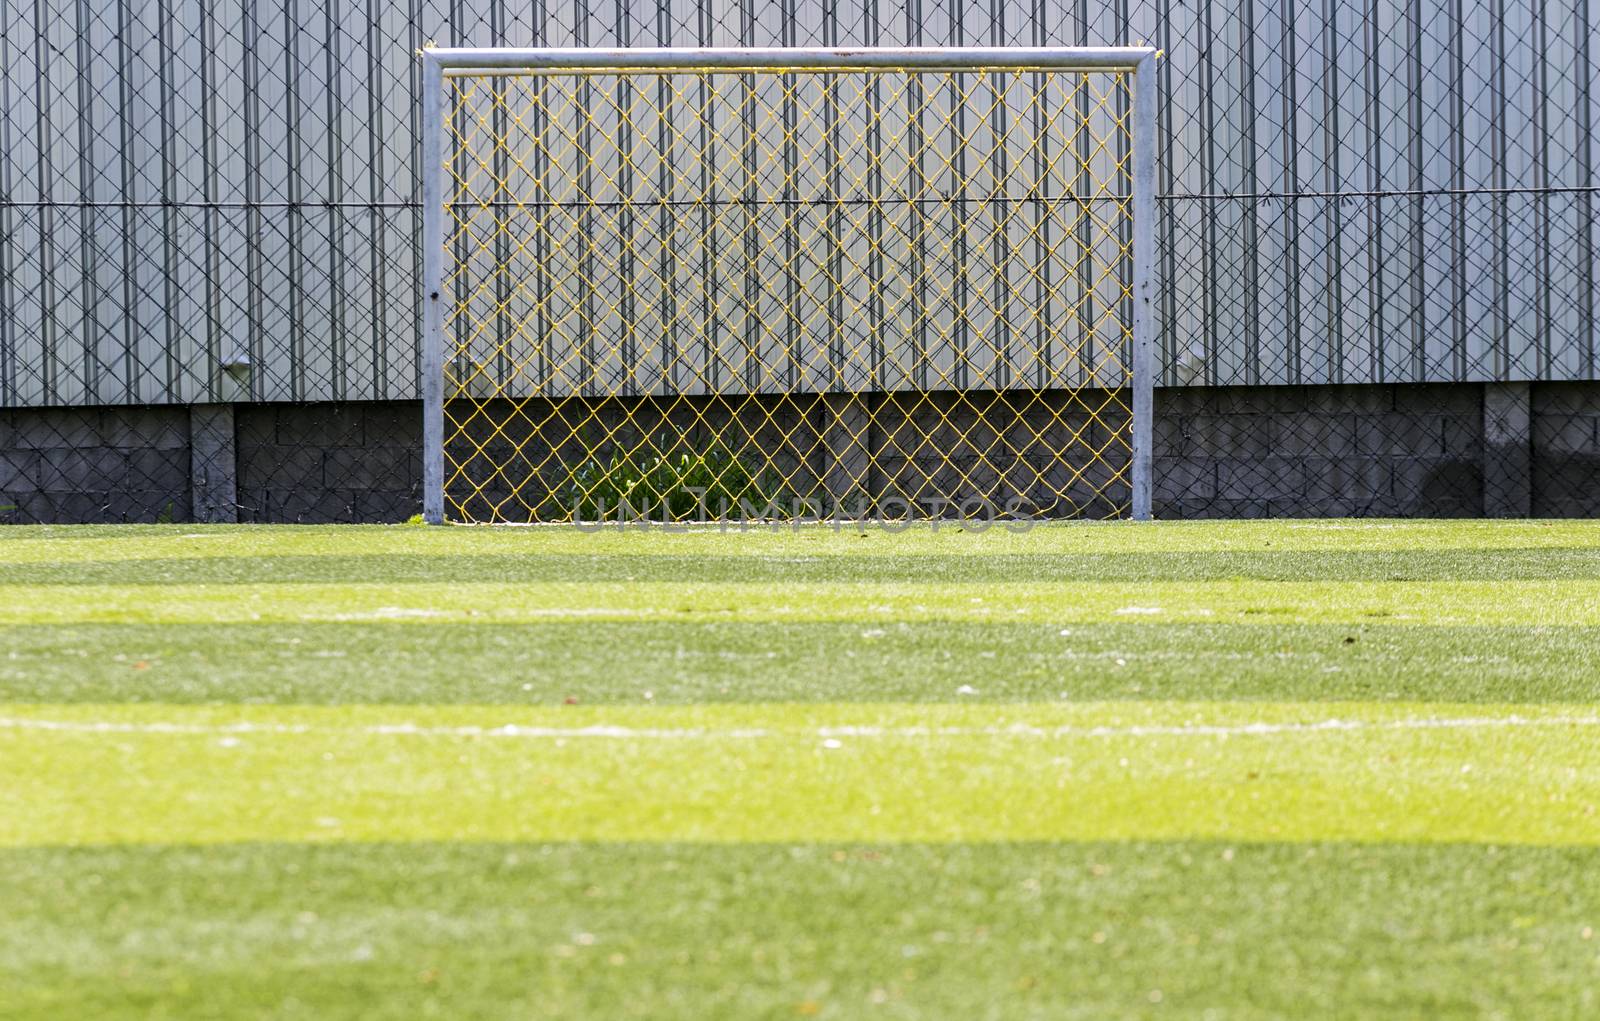 Goal soccer green field background by 2nix